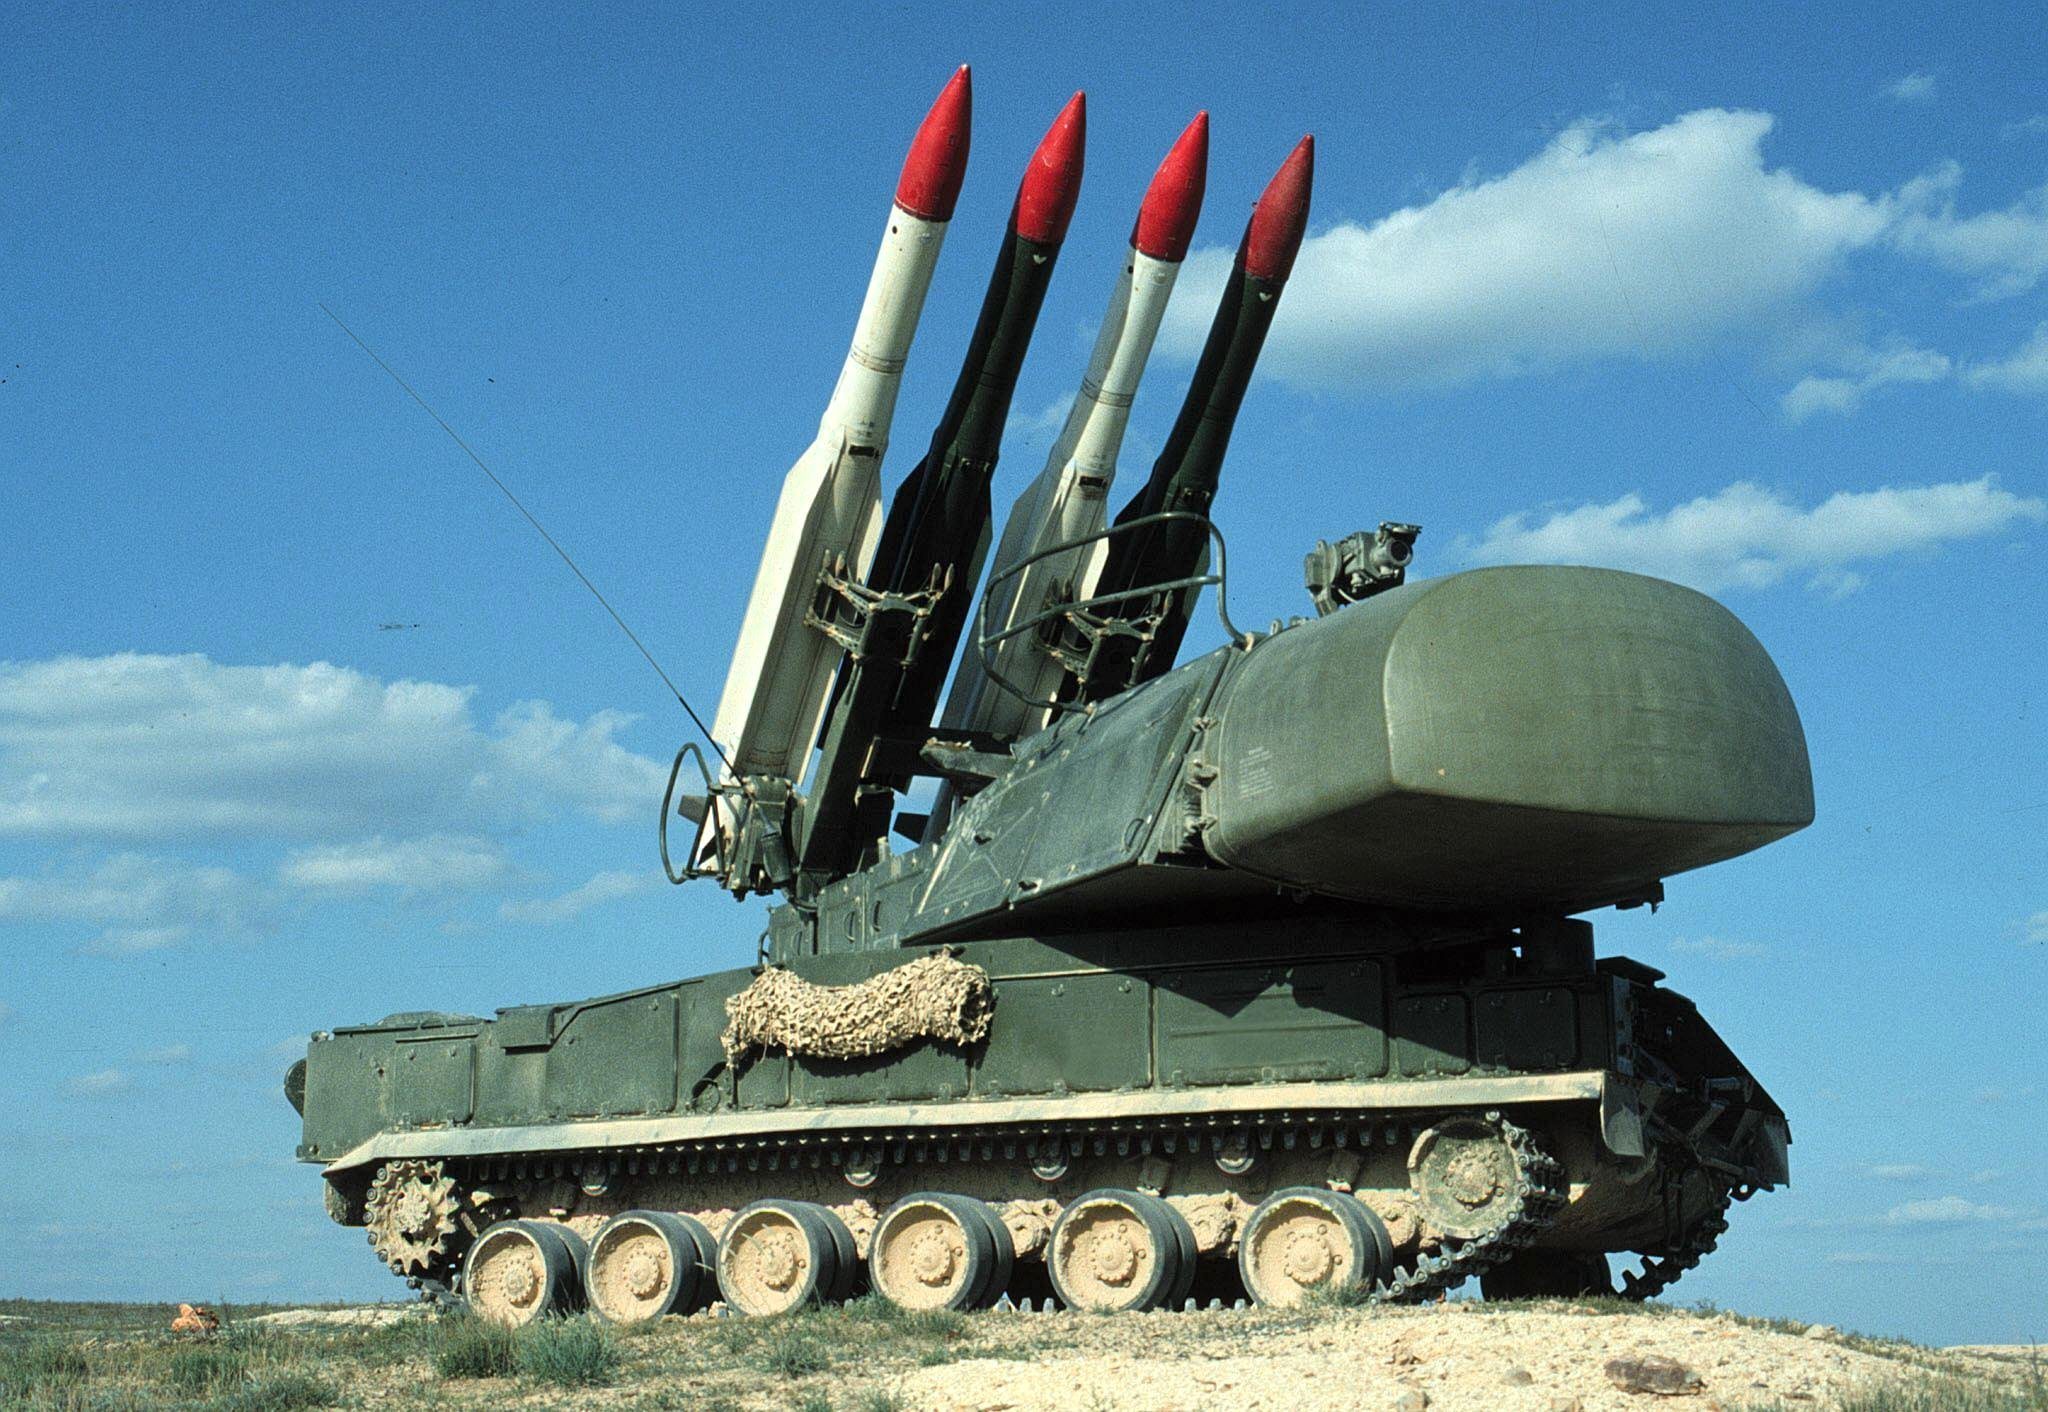 most modern anti-tank missiles